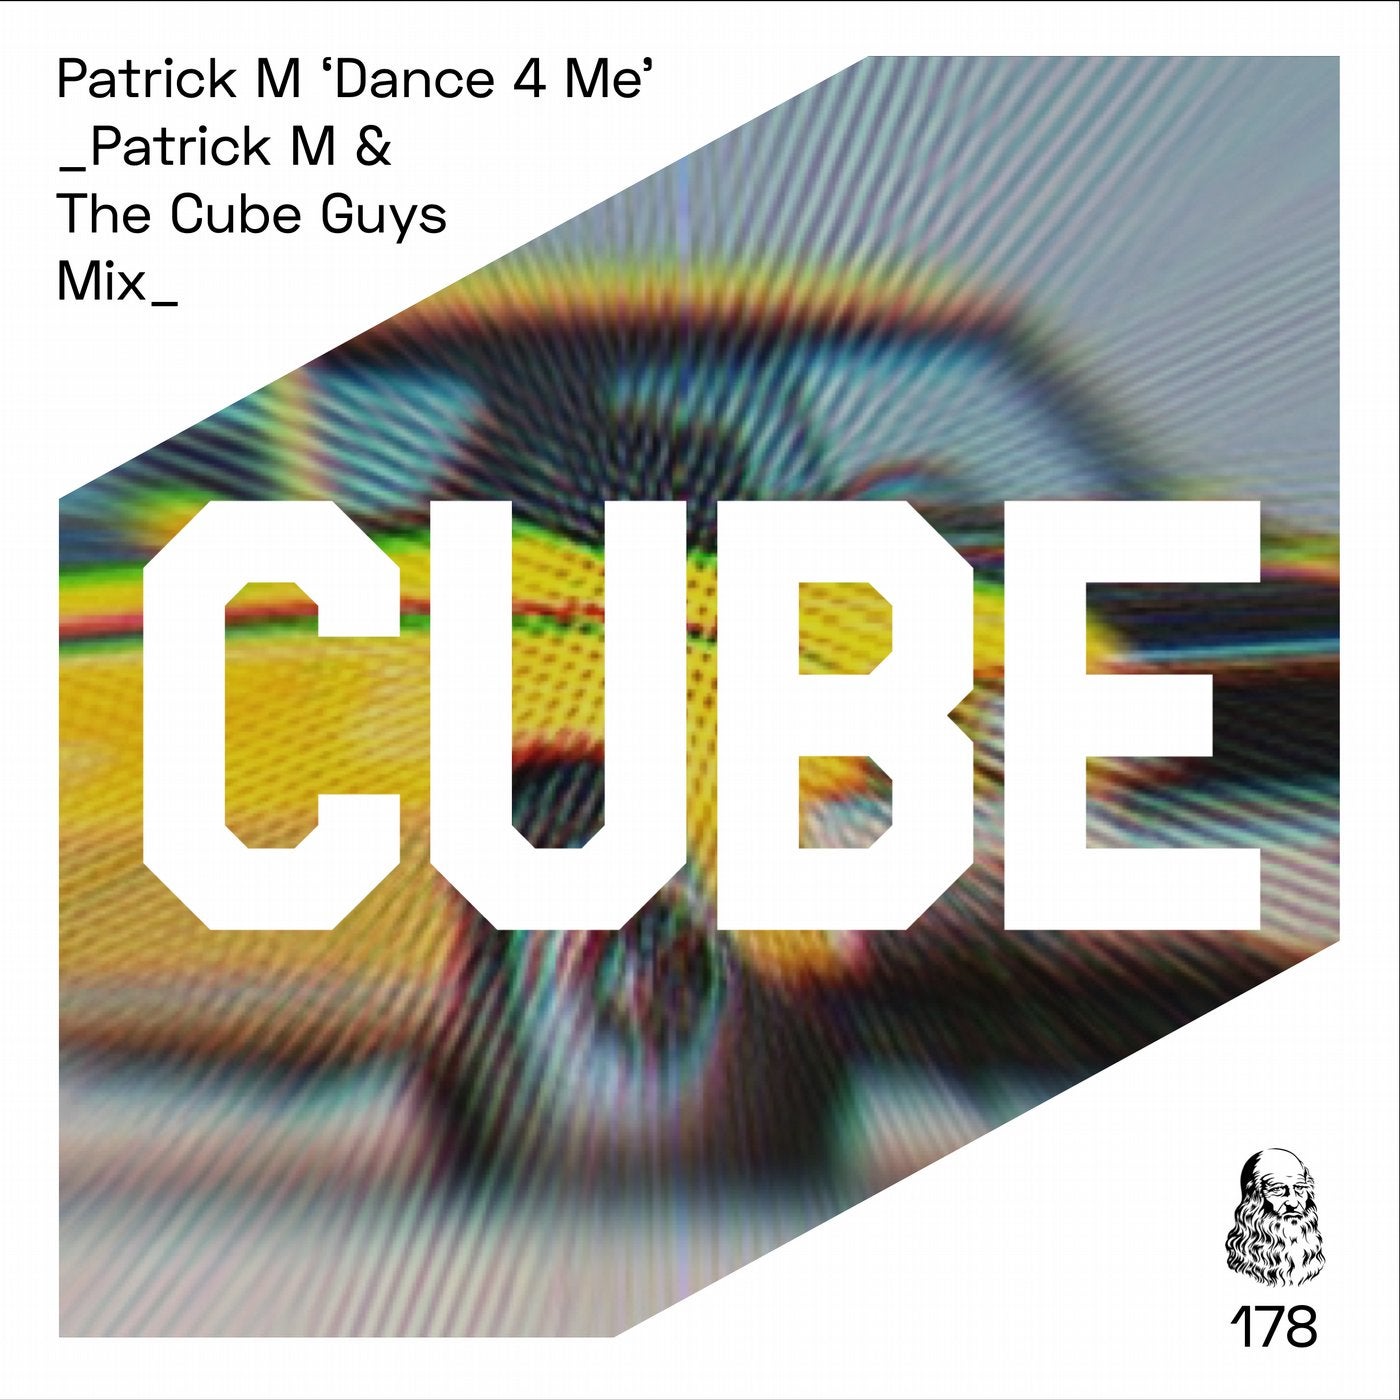 Cube records. Pat m